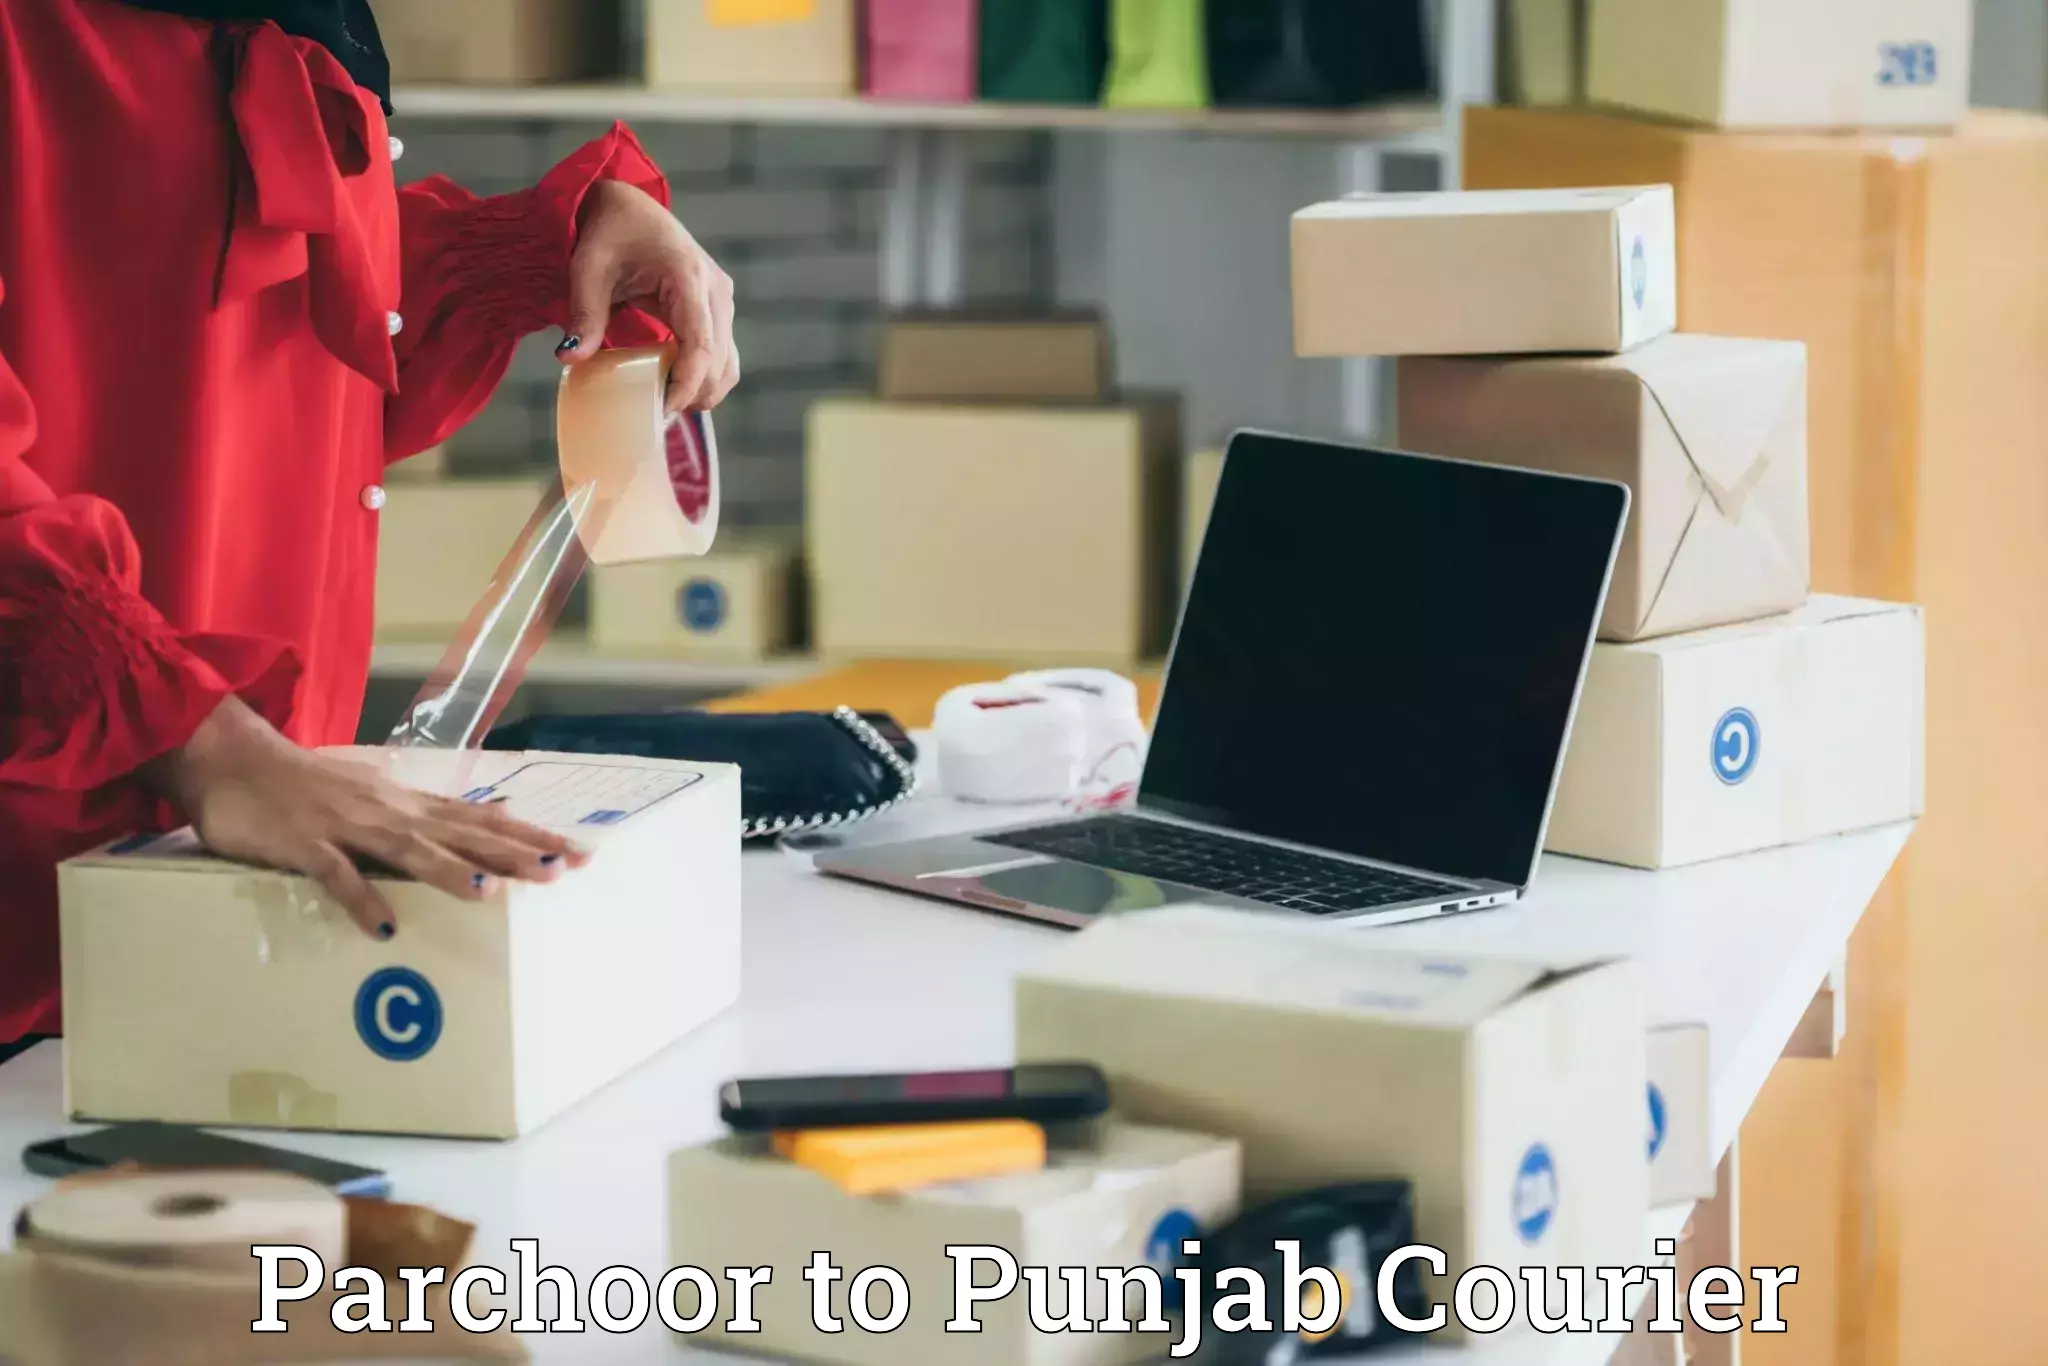 Bulk courier orders Parchoor to Ludhiana